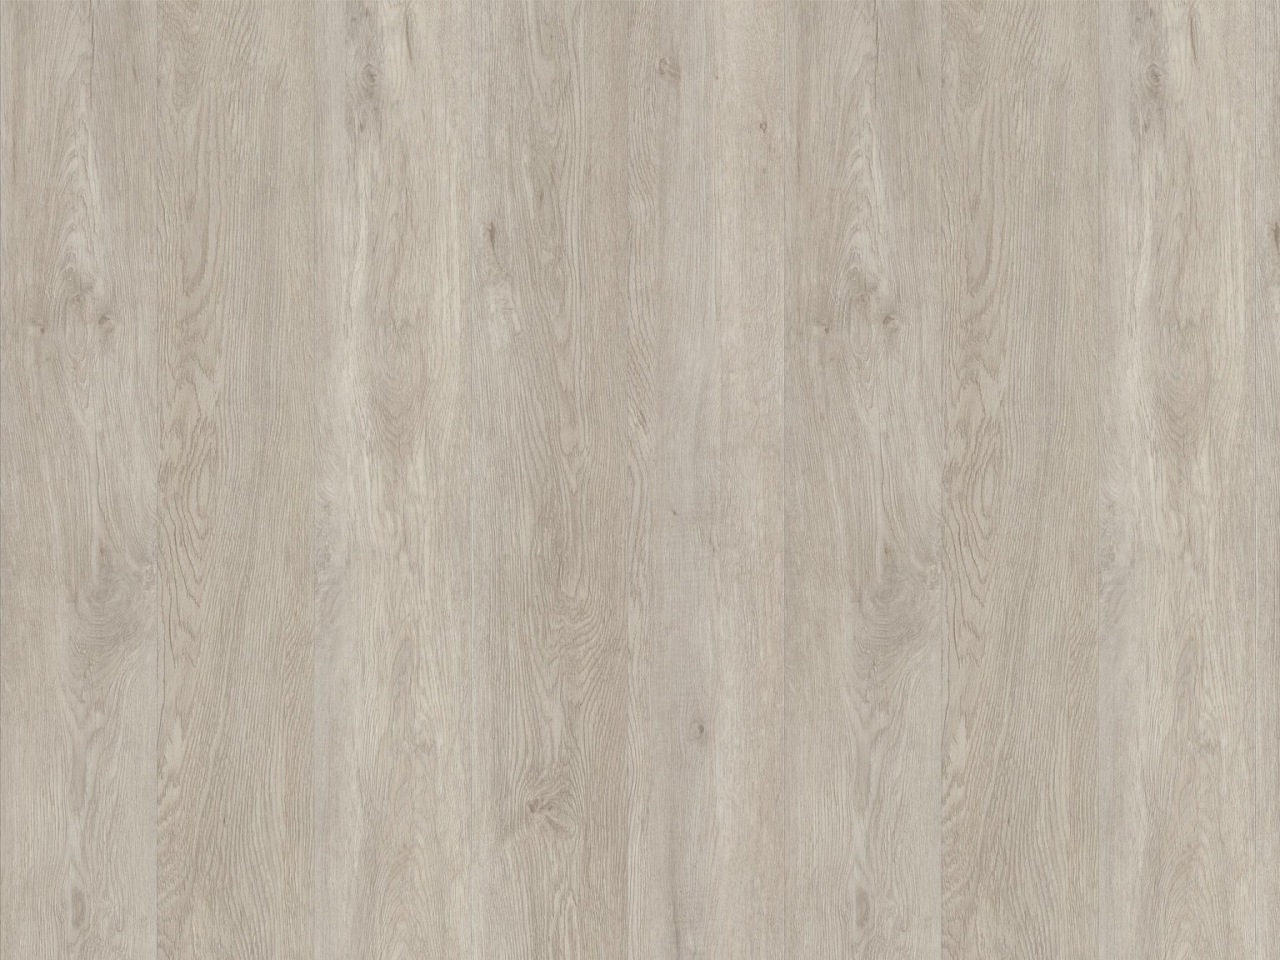 Designbelag Alesso wood – Eiche Namur, 324004